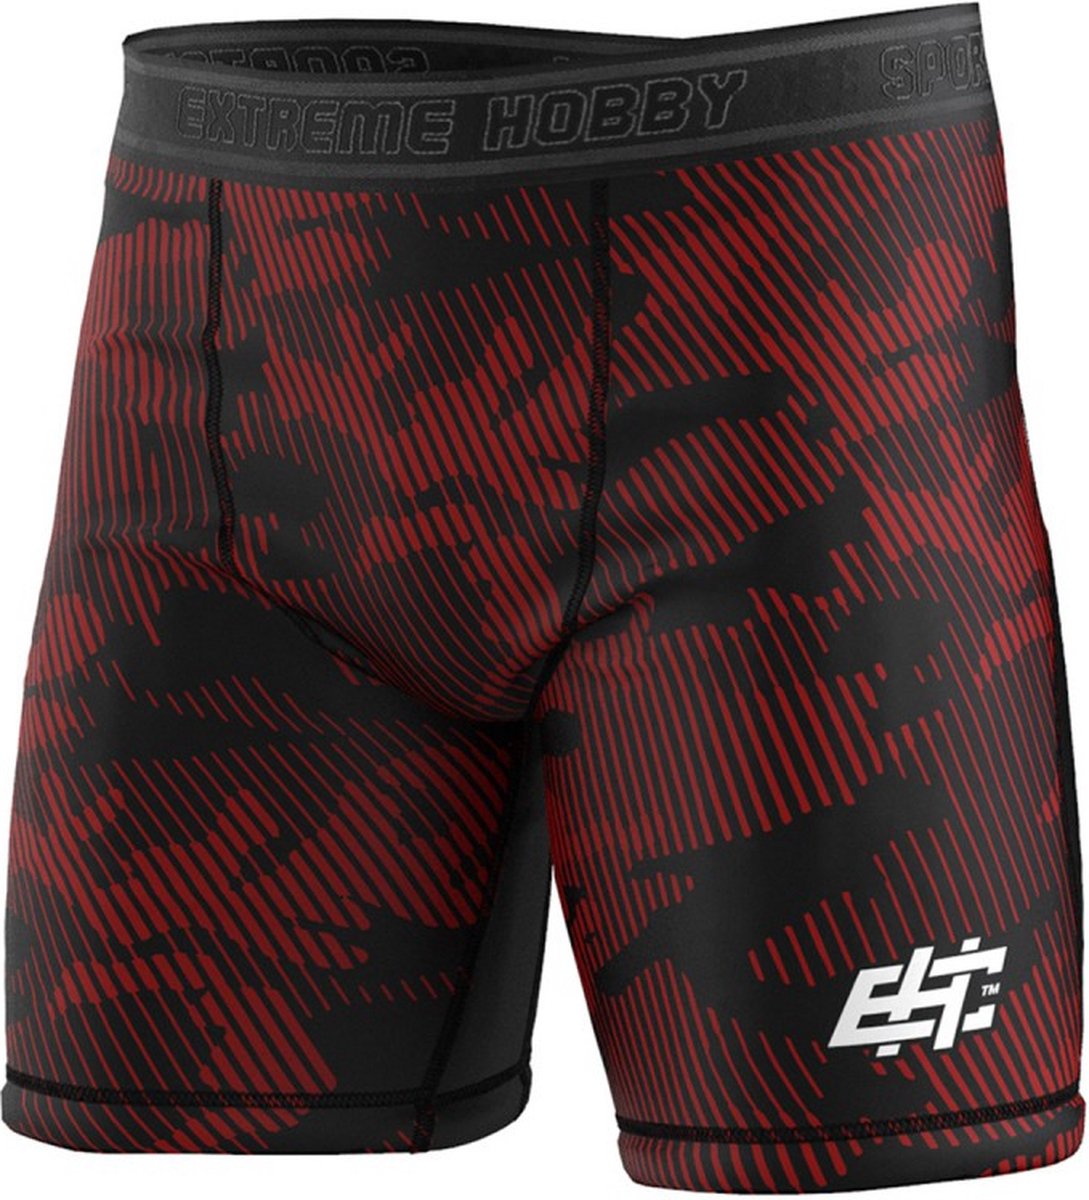 Extreme Hobby - MMA / BJJ Shorts - grappling Vale Tudo Shorts - Compressie Shorts -Havoc Red - Rood, Zwart - Maat XL